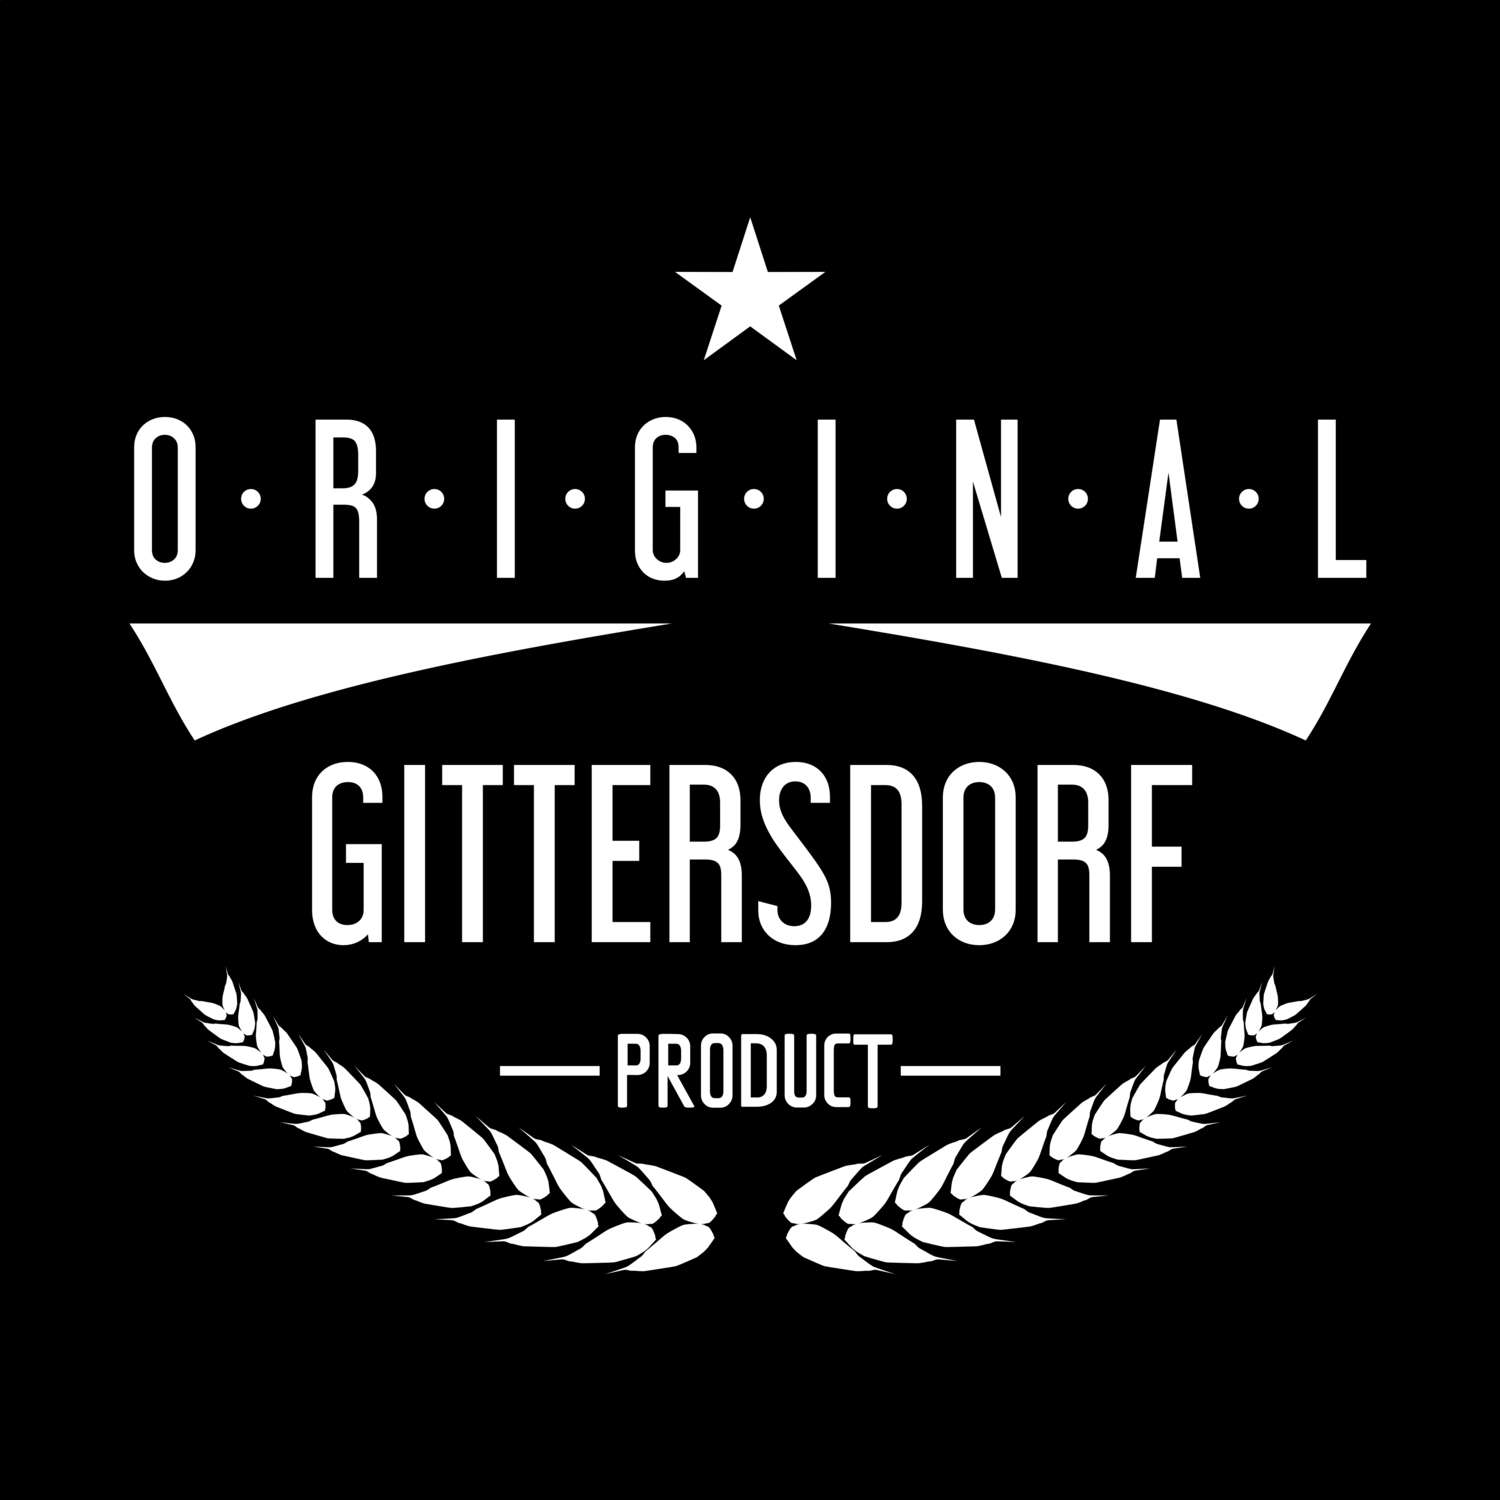 Gittersdorf T-Shirt »Original Product«